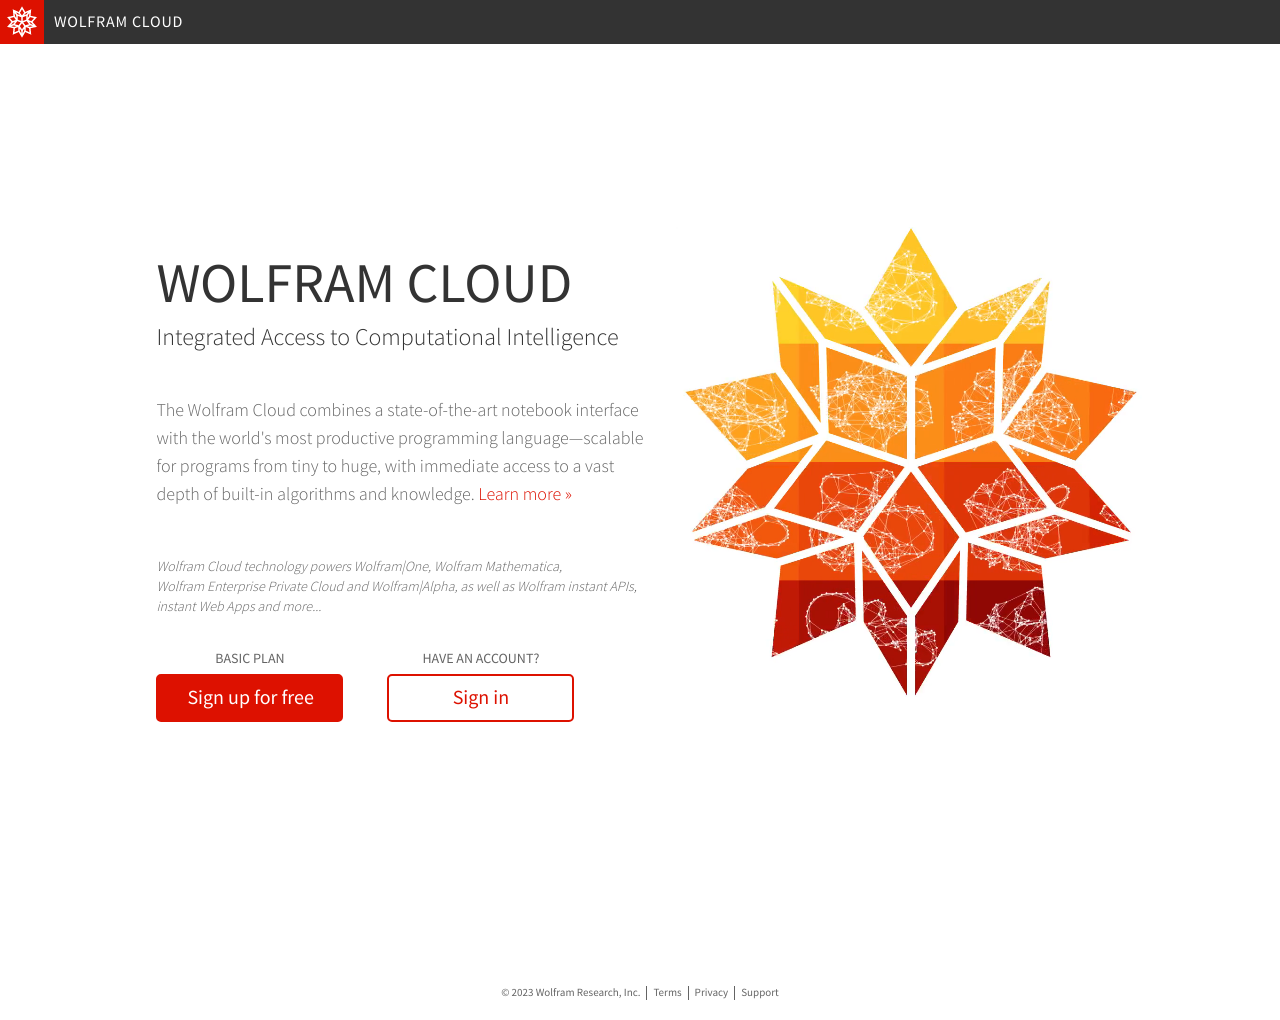 Wolfram Cloud